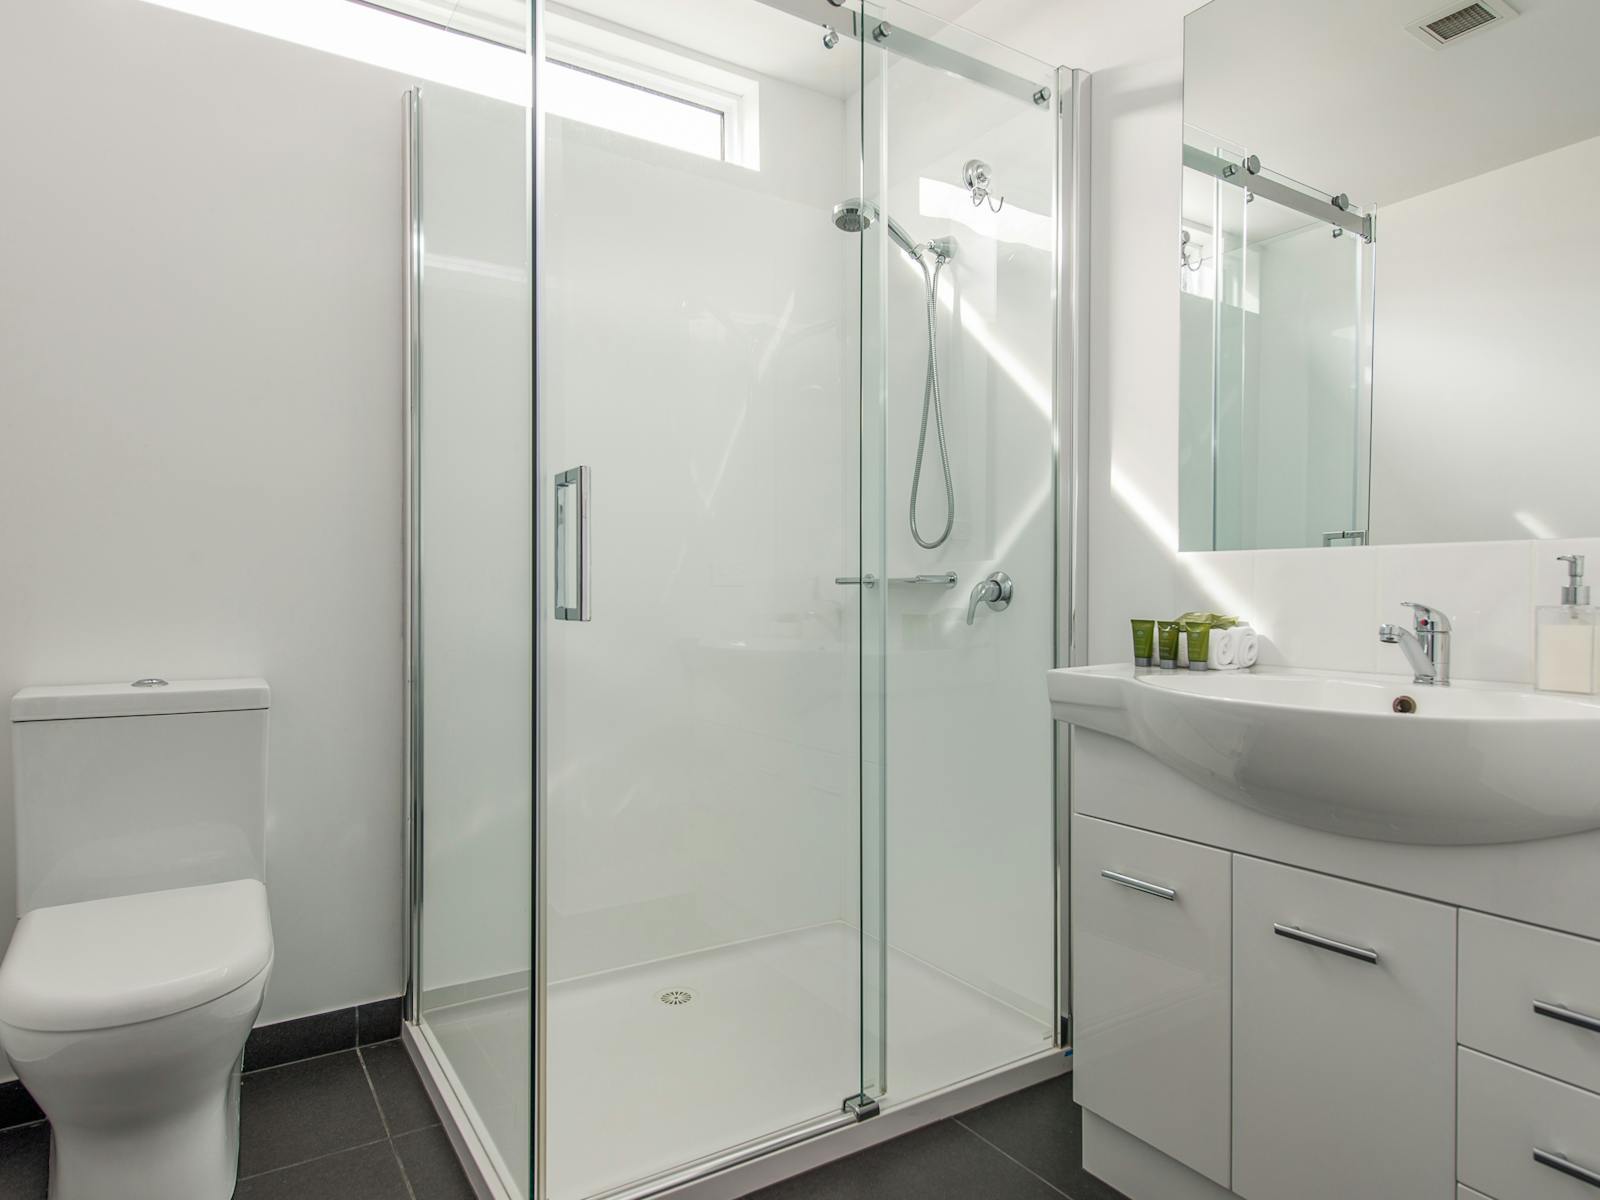 Apartment 1 en-suite bathroom with shower, toilet and vanity